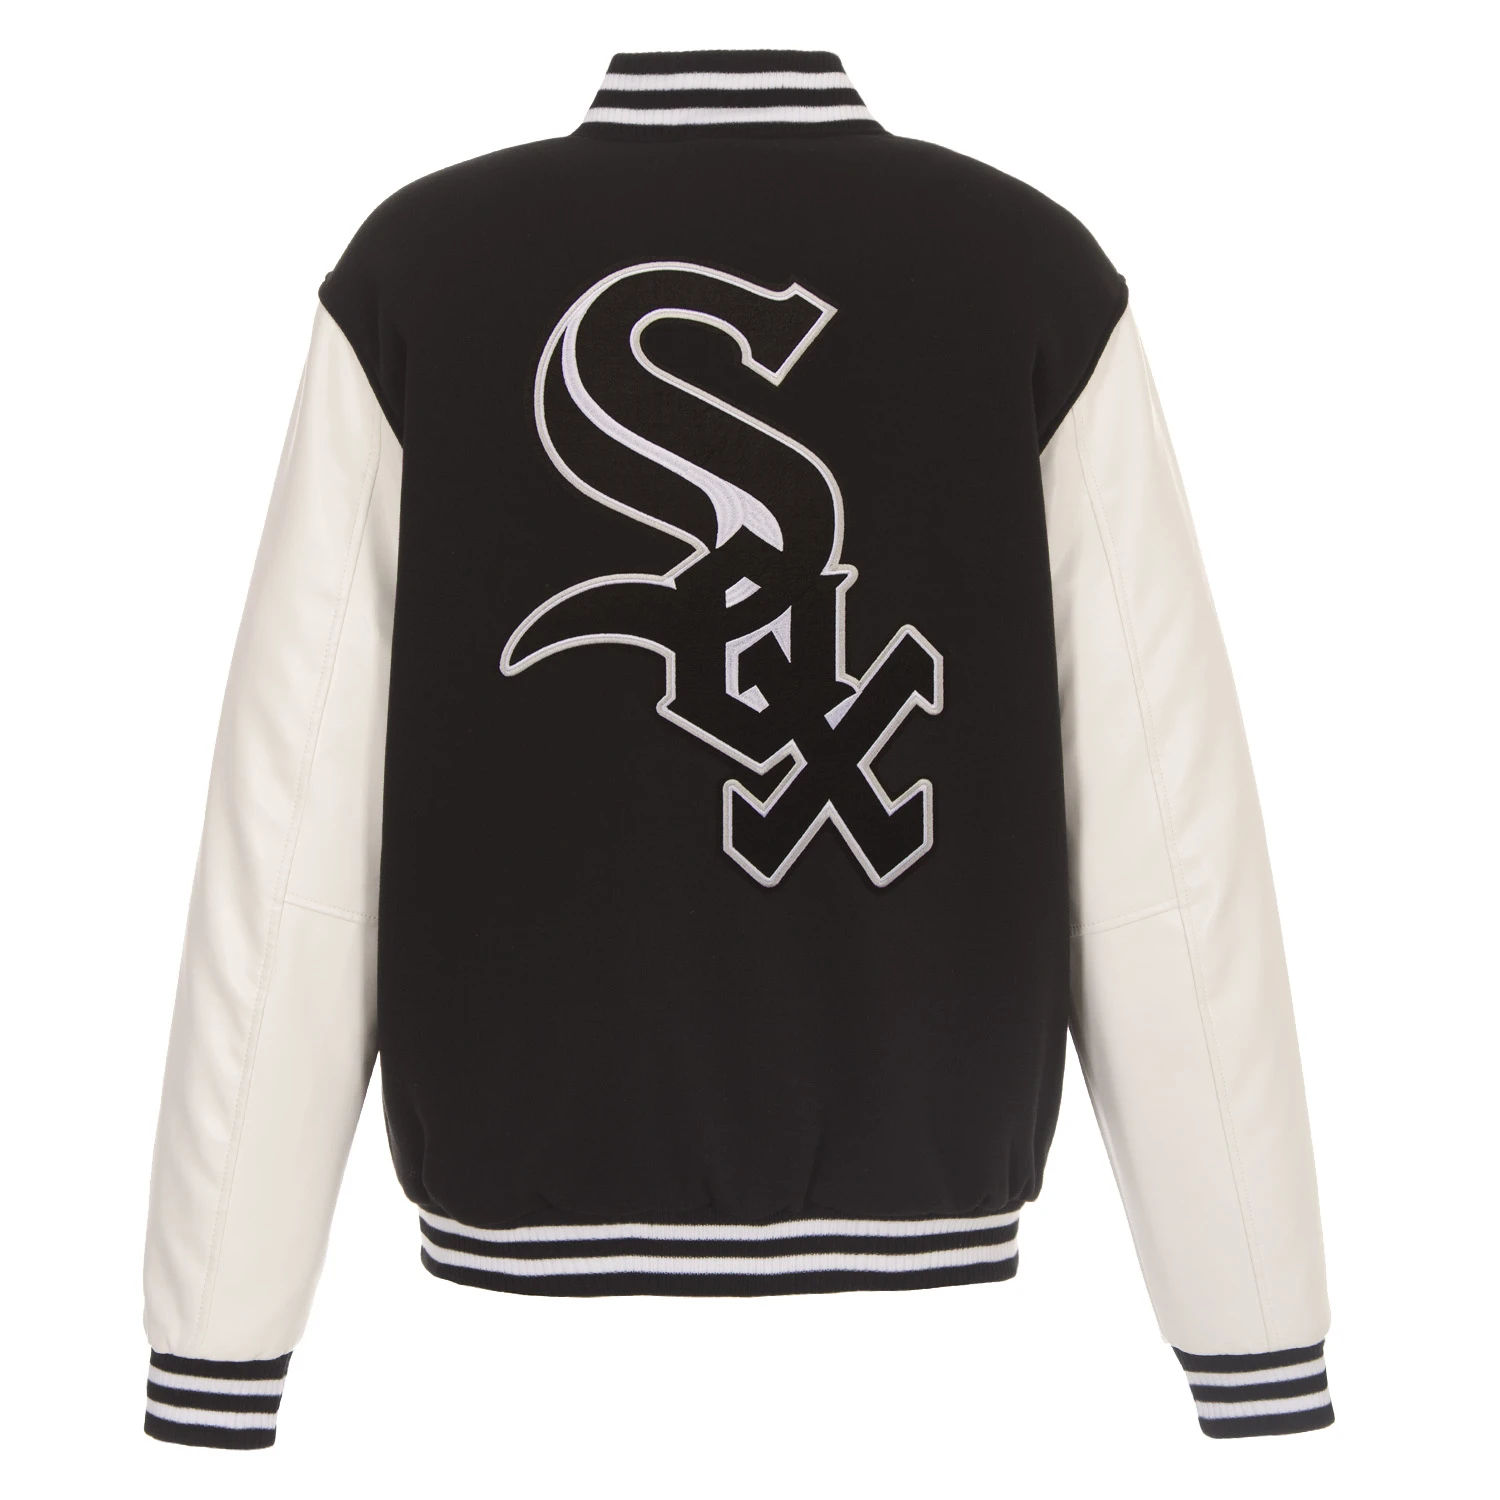 Chicago White Sox Fleece Leather Jacket